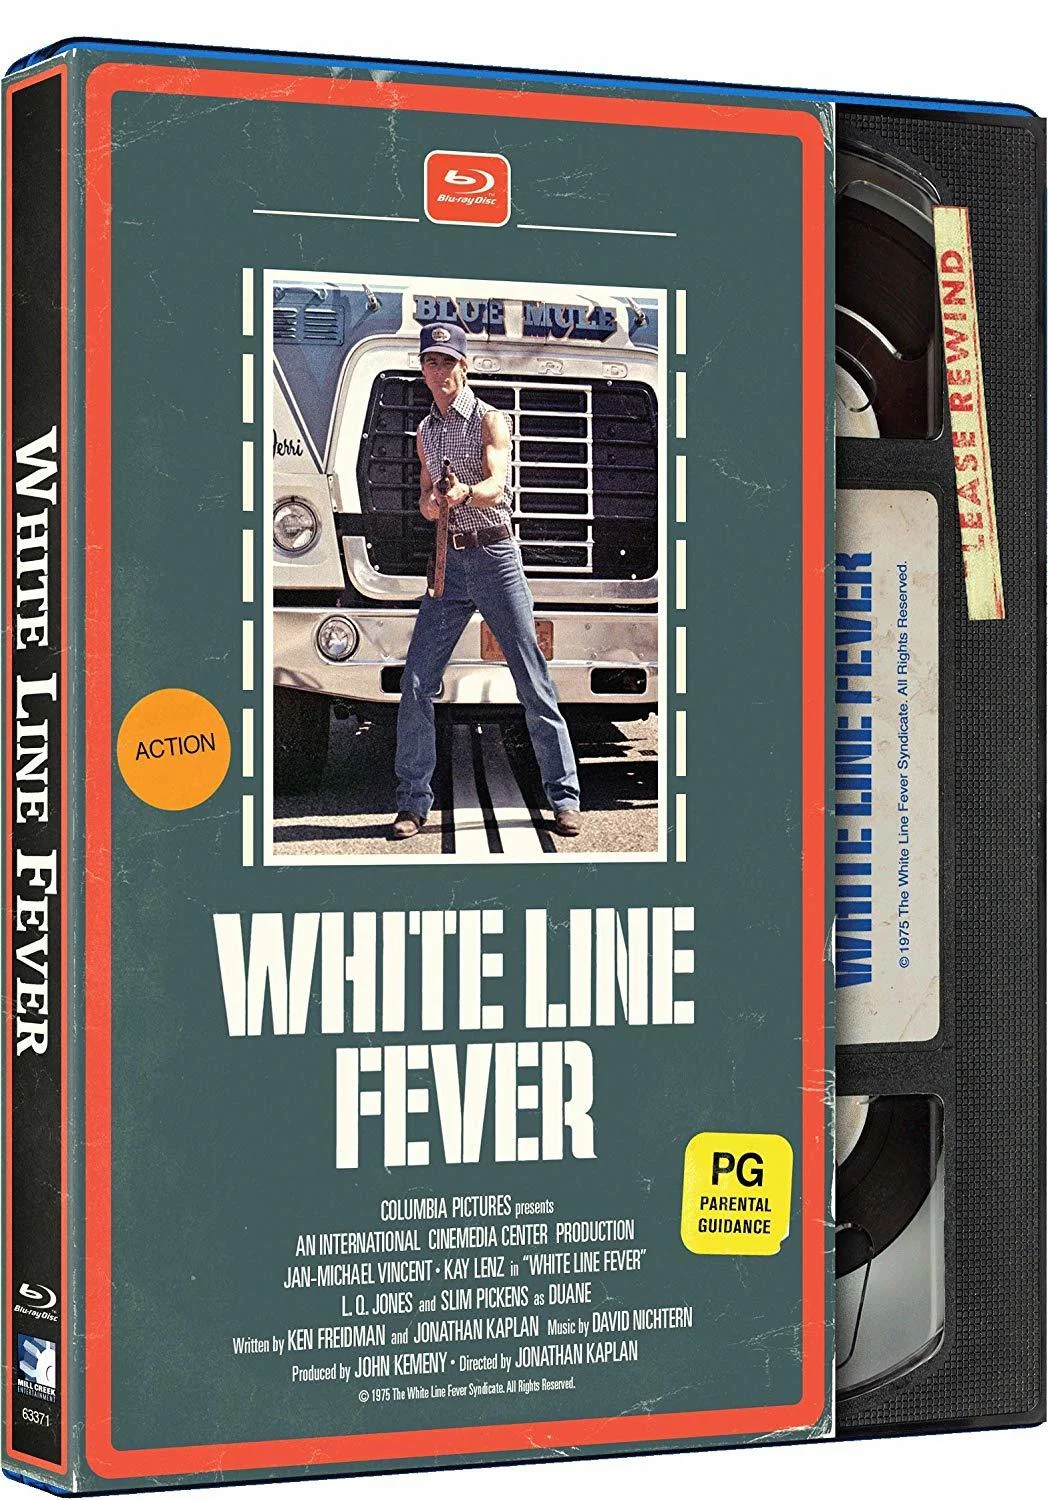 White Line Fever (Retro VHS) (Blu-ray) on MovieShack